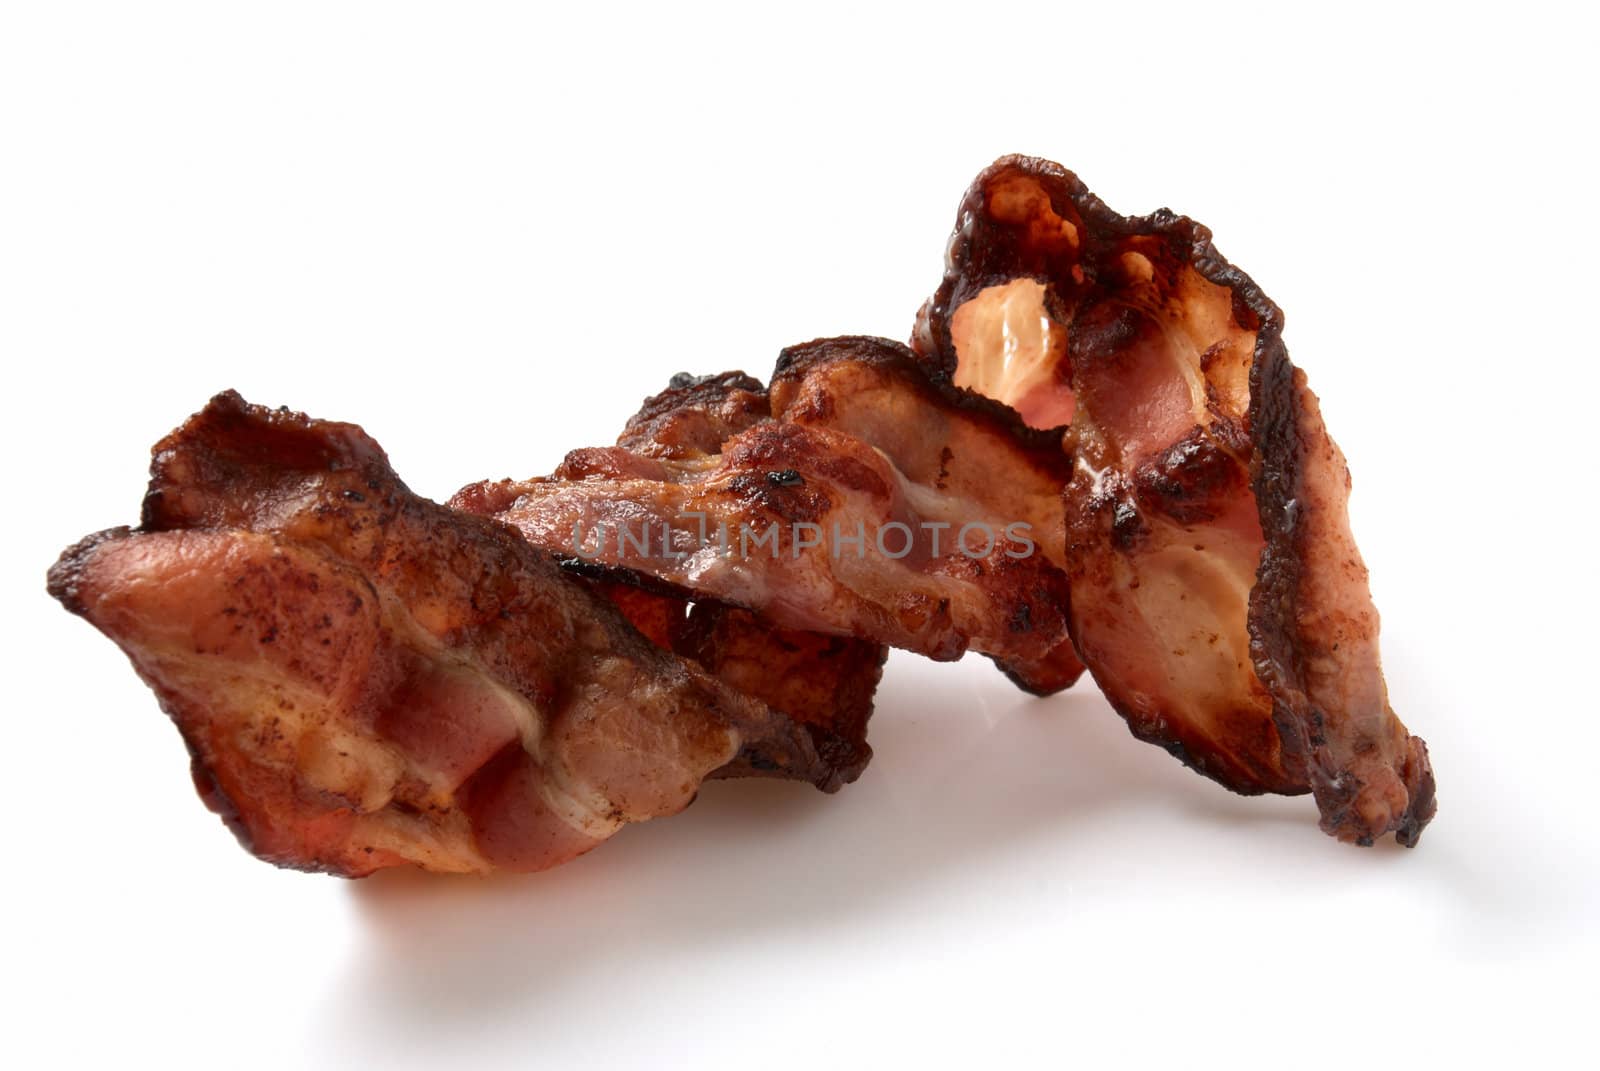 Crunchy fried bacon rashers